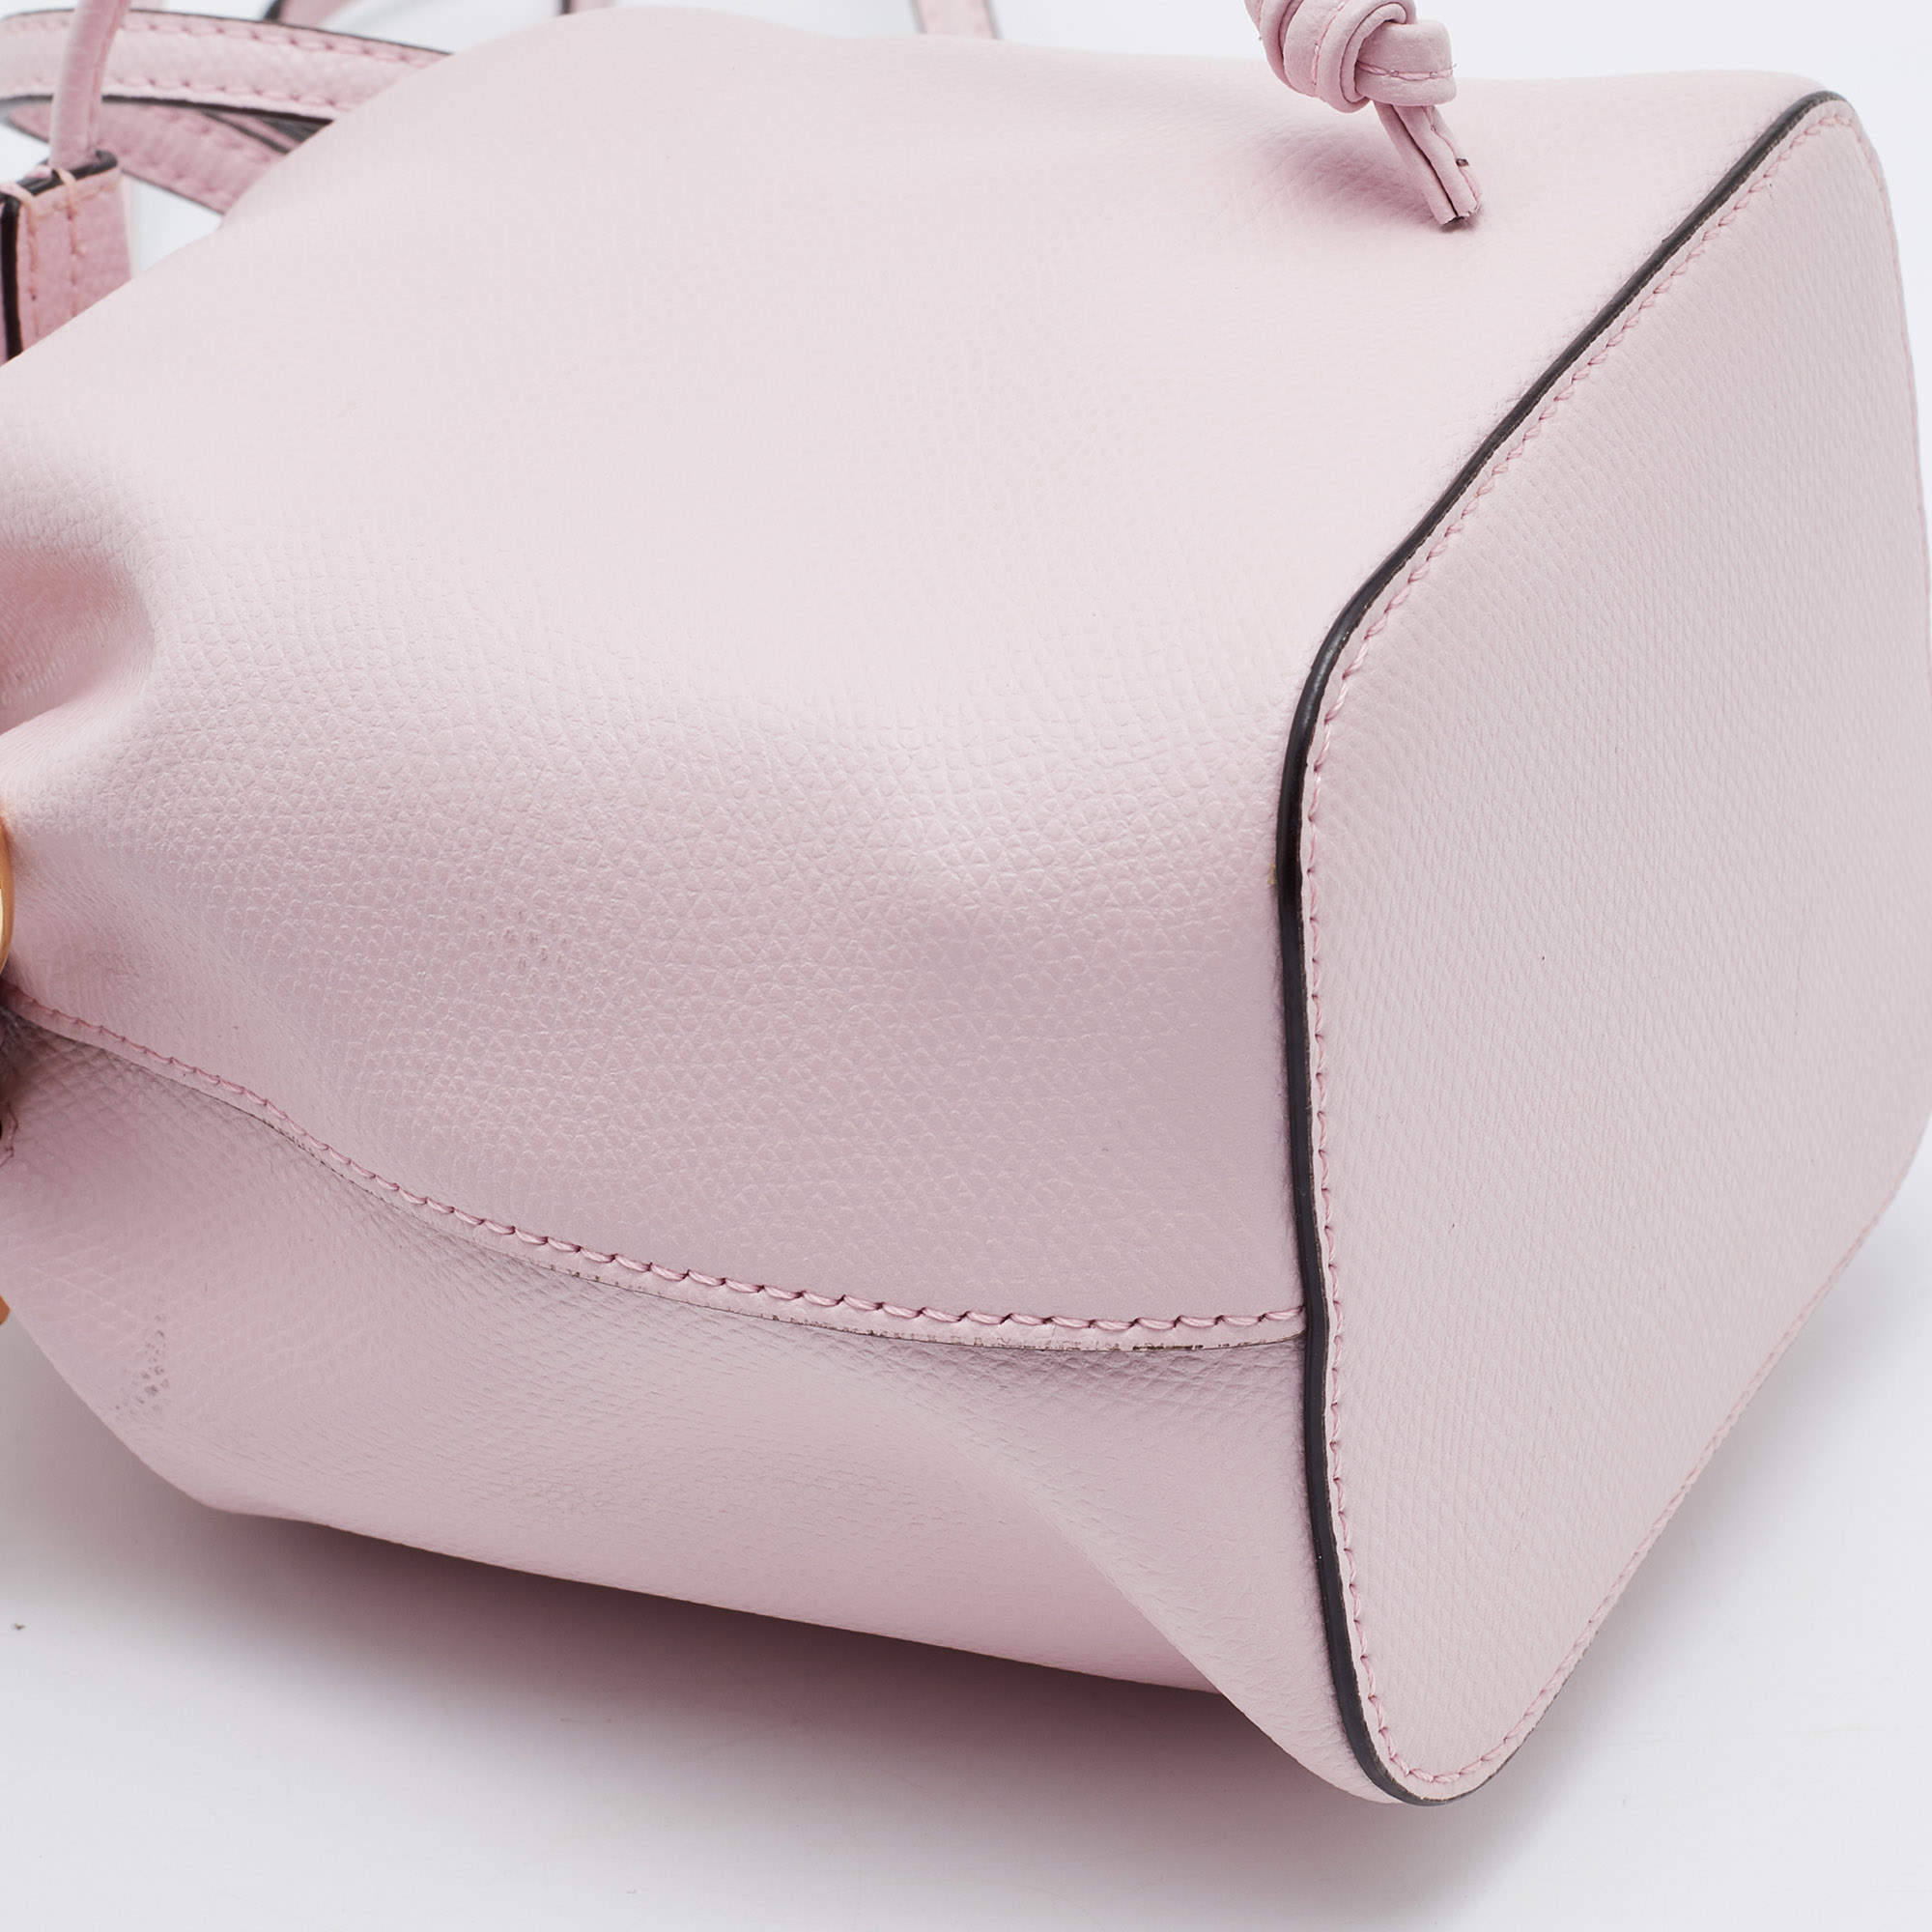 Fendi Mon Tresor Bucket Bag Leather Mini Pink 432341